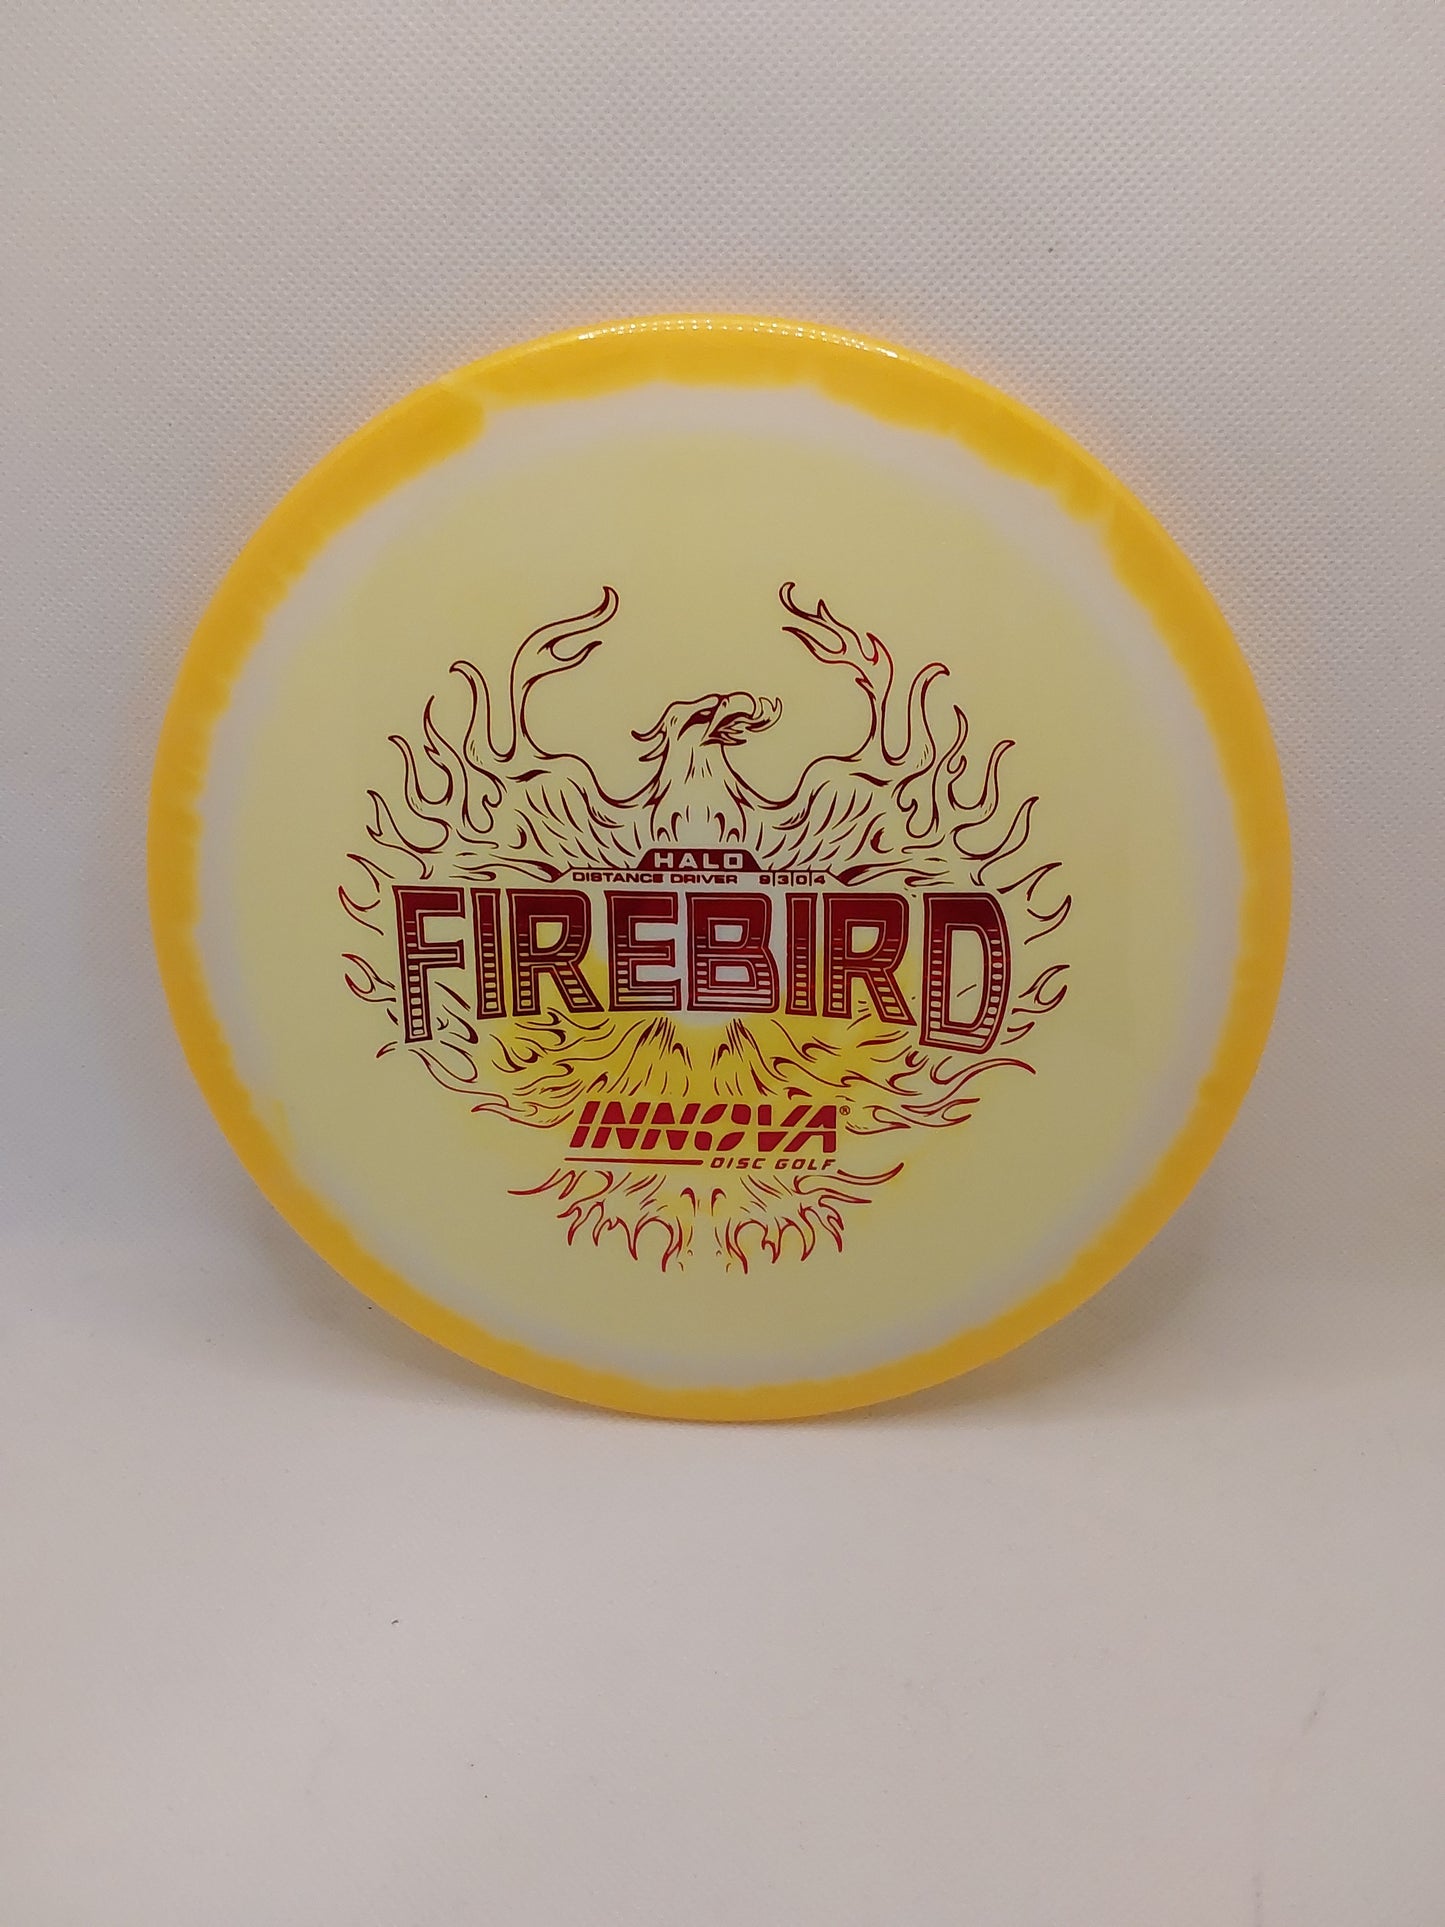 Innova Firebird